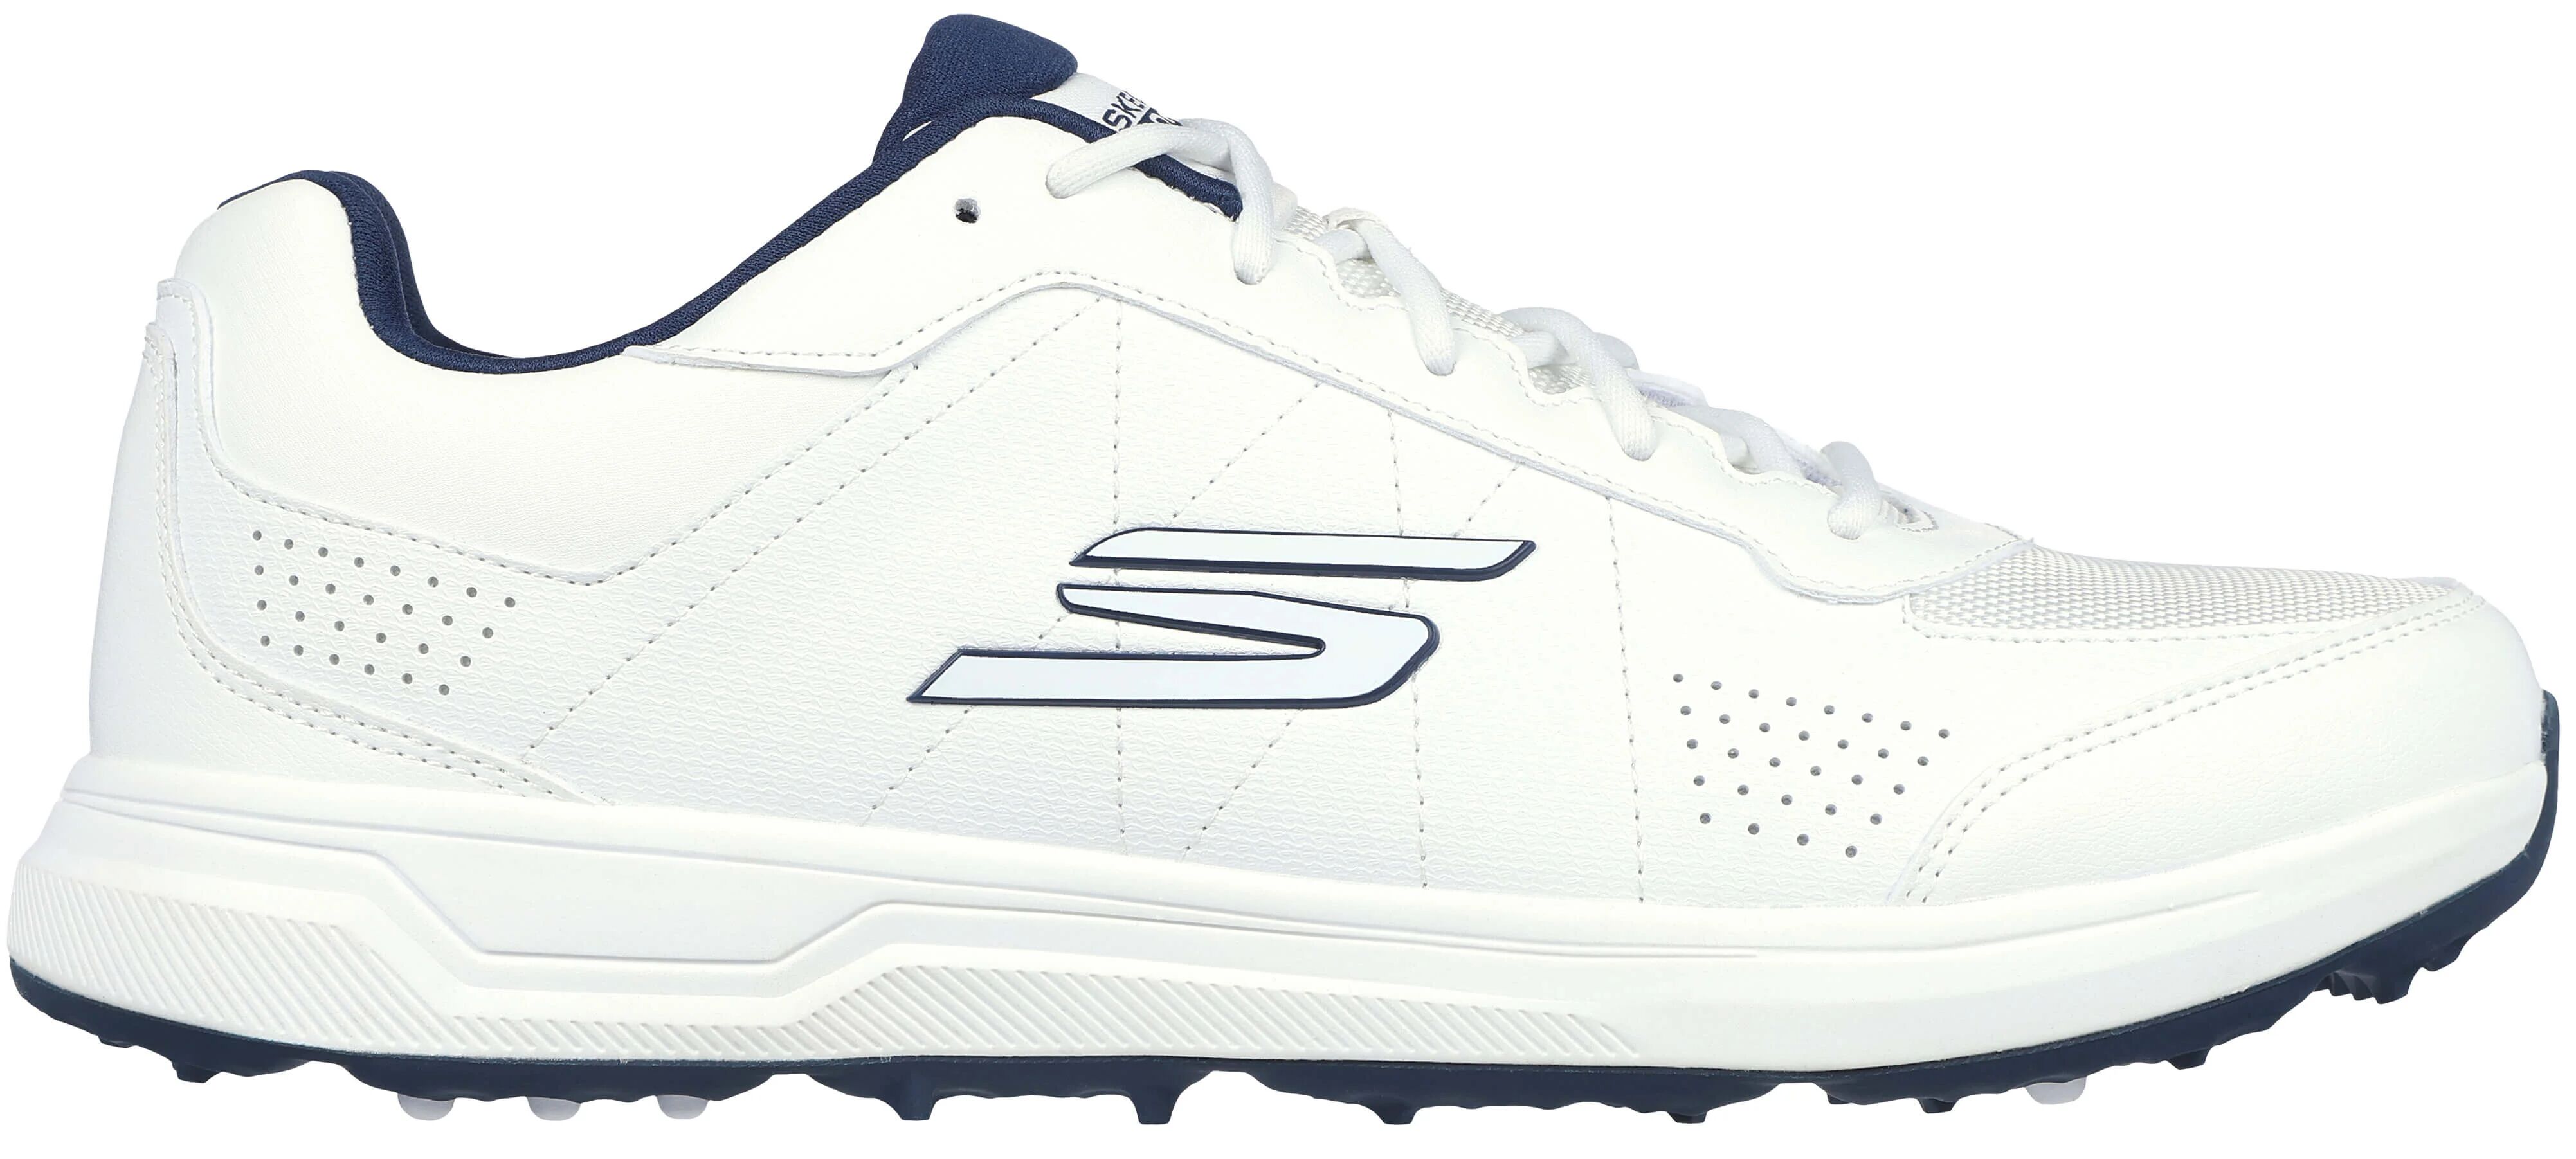 Skechers GO GOLF Prime Golf Shoes - White/Navy - 9.5 - MEDIUM